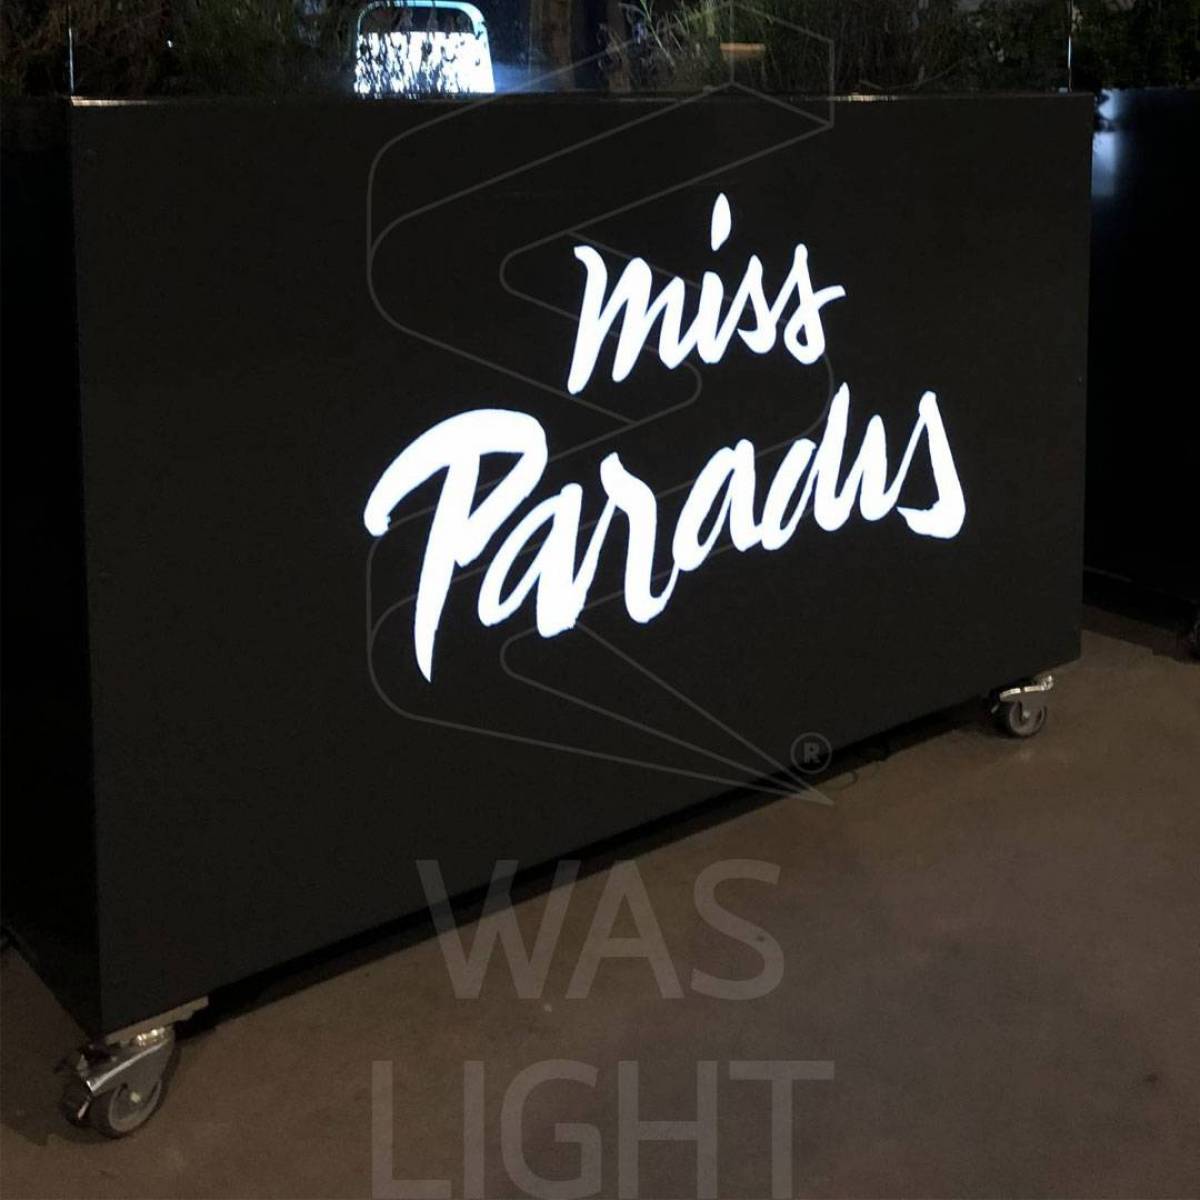 Enseigne PMMA électroluminescente Miss Paradis Lyon